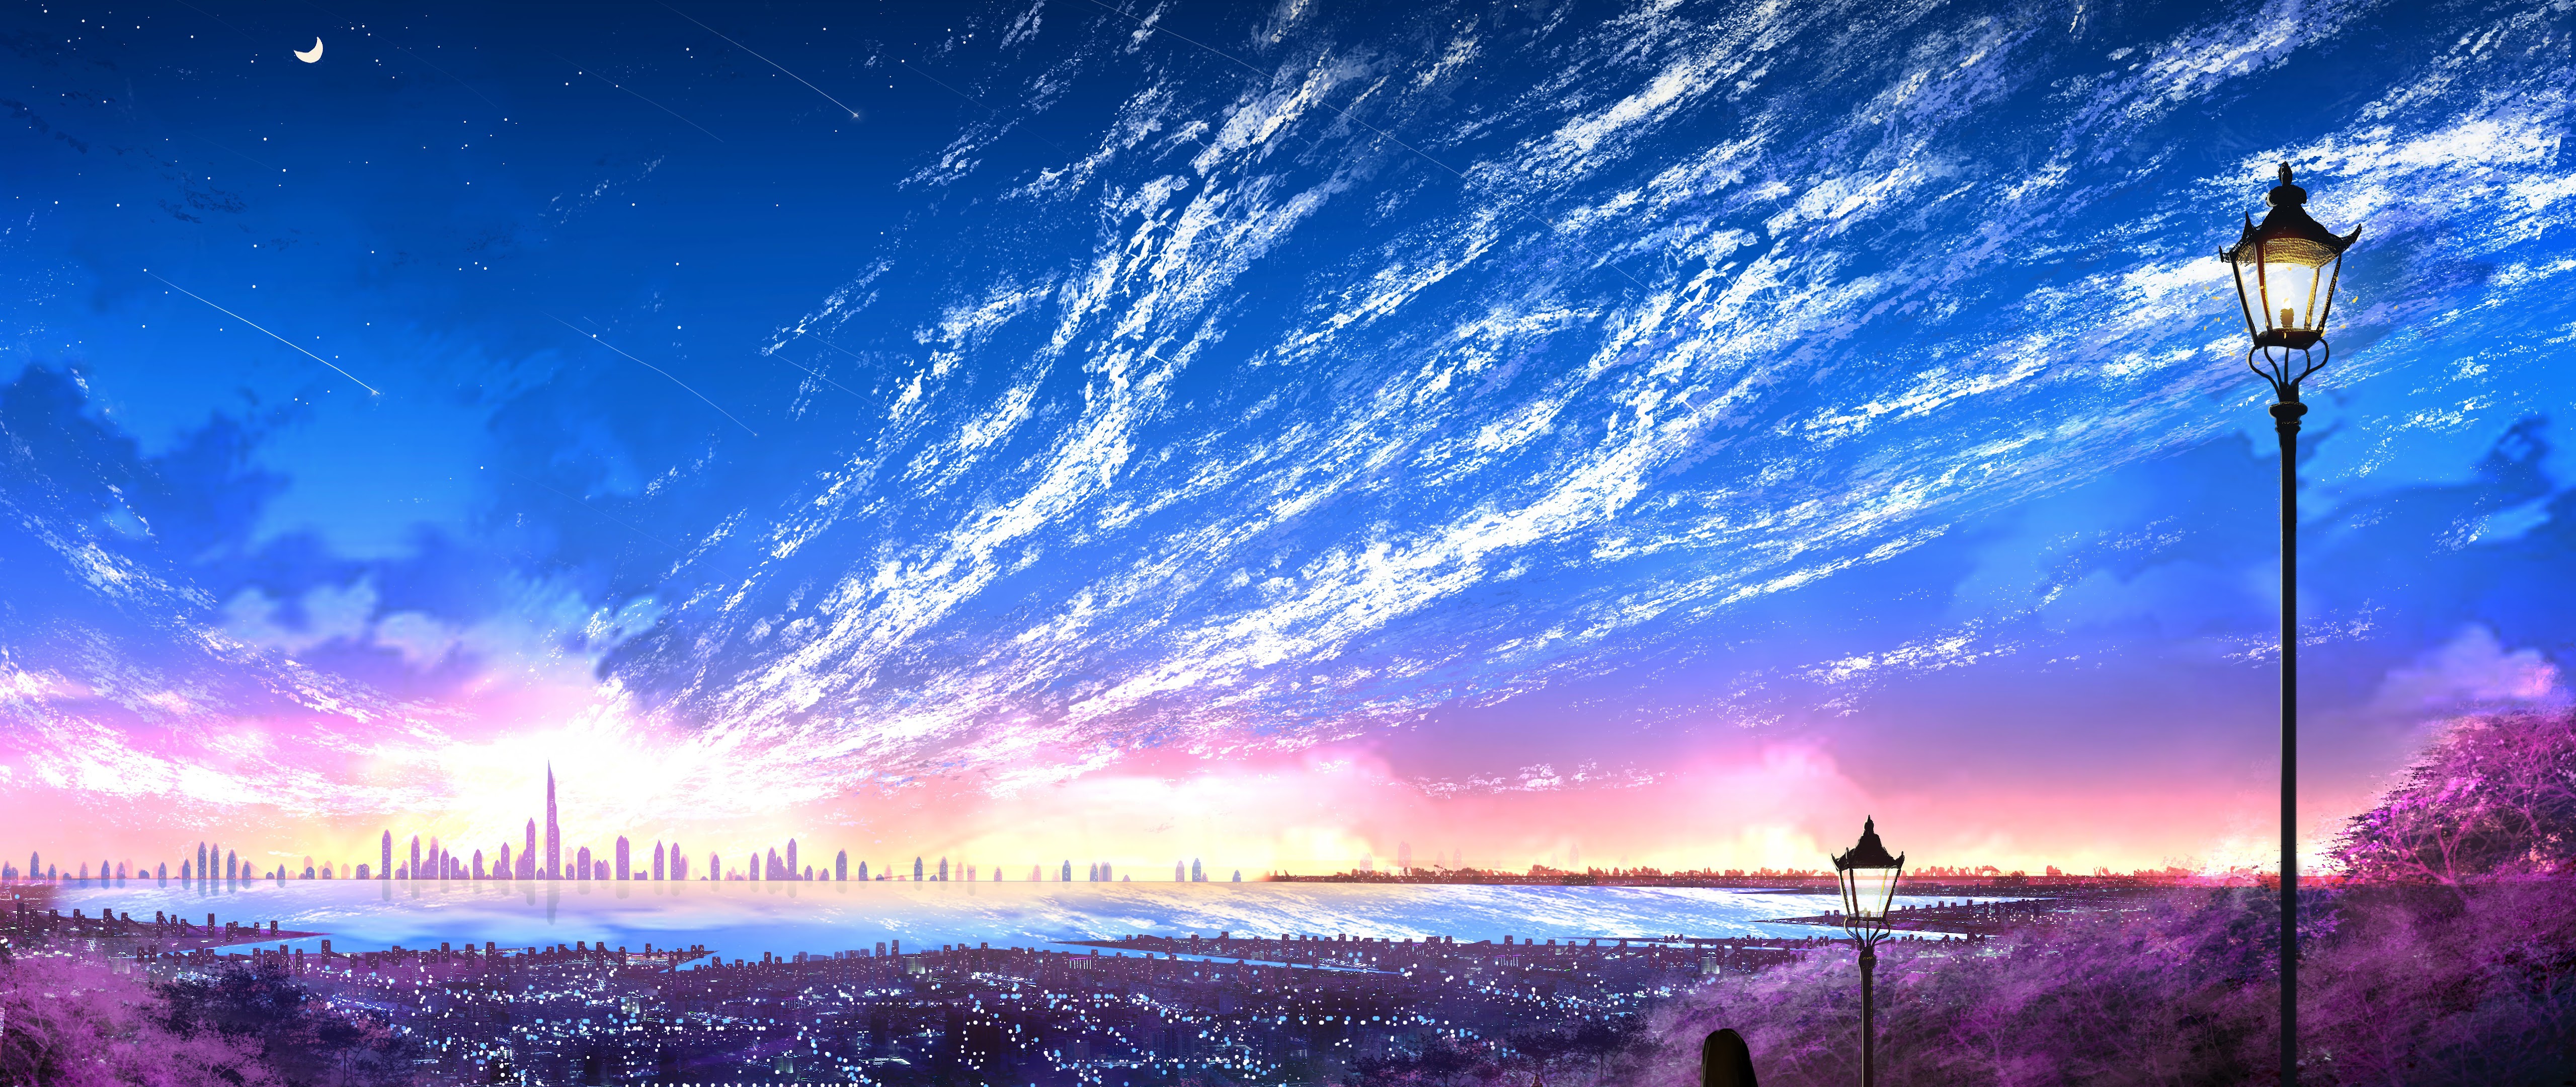 4K Anime Scenery Wallpapers